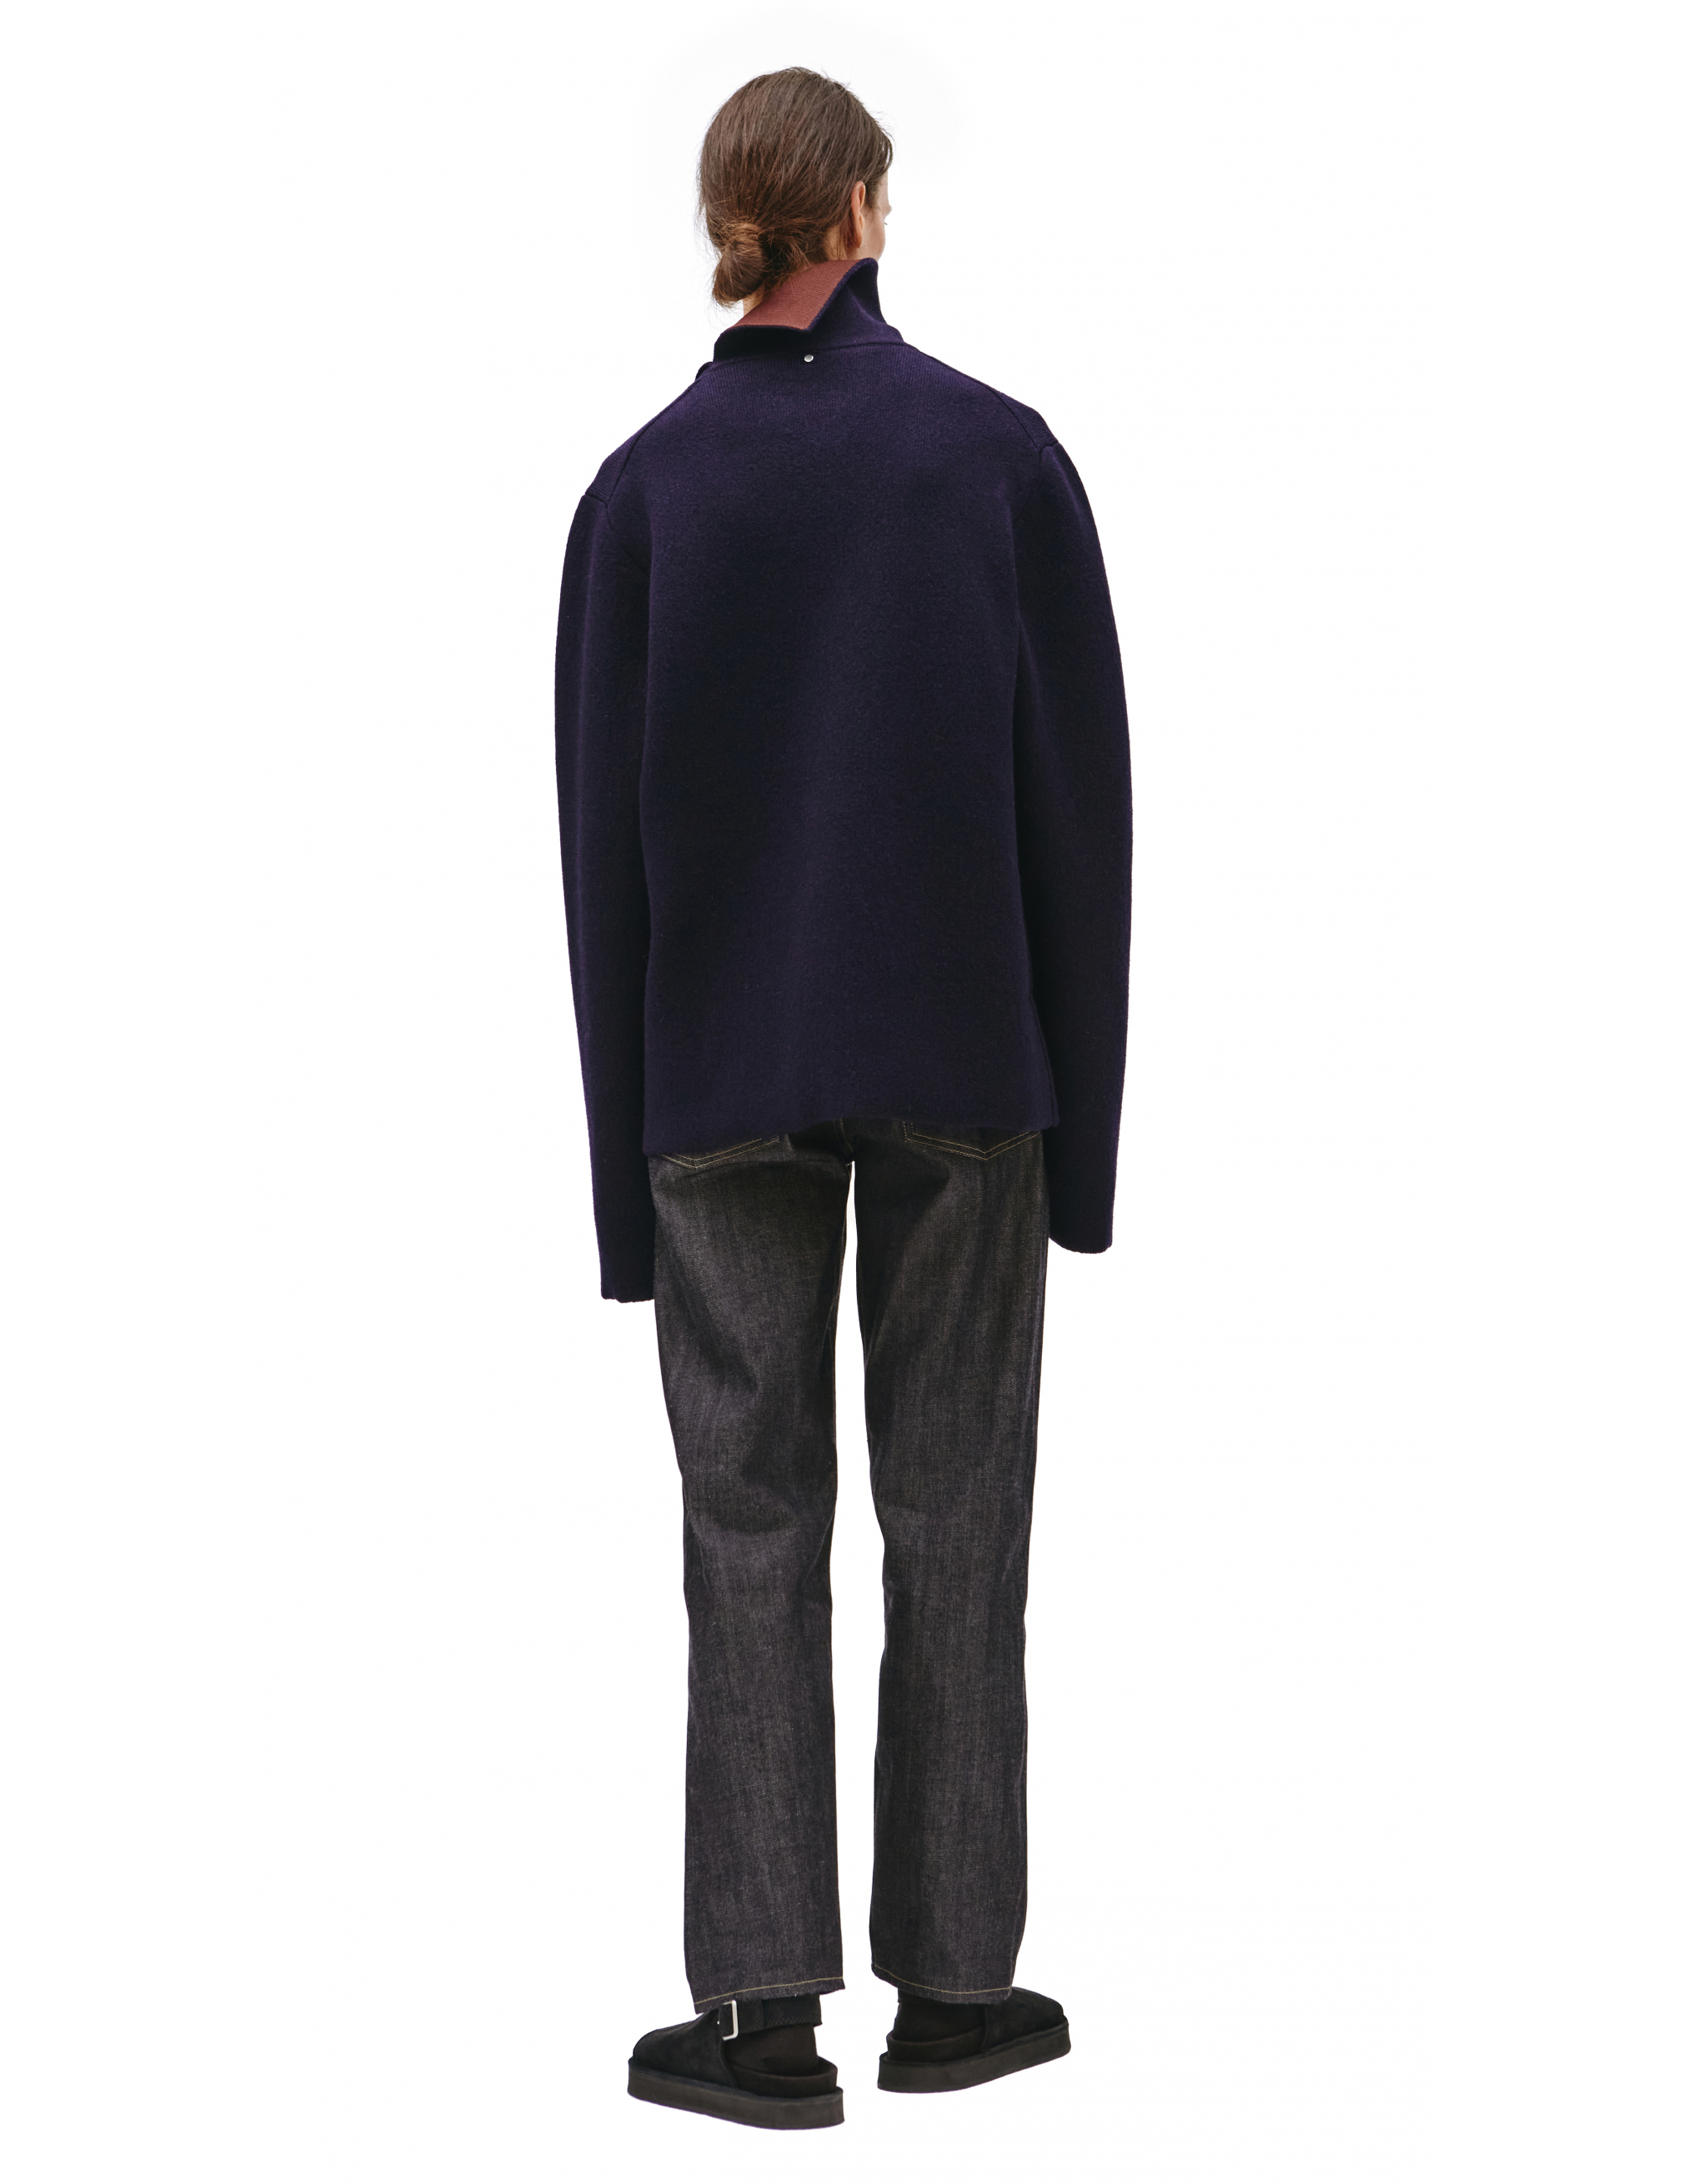 Темно-синий свитер с контрастным воротником OAMC OAMT751167/OTY20002A/401, размер XXL;XL;L OAMT751167/OTY20002A/401 - фото 3